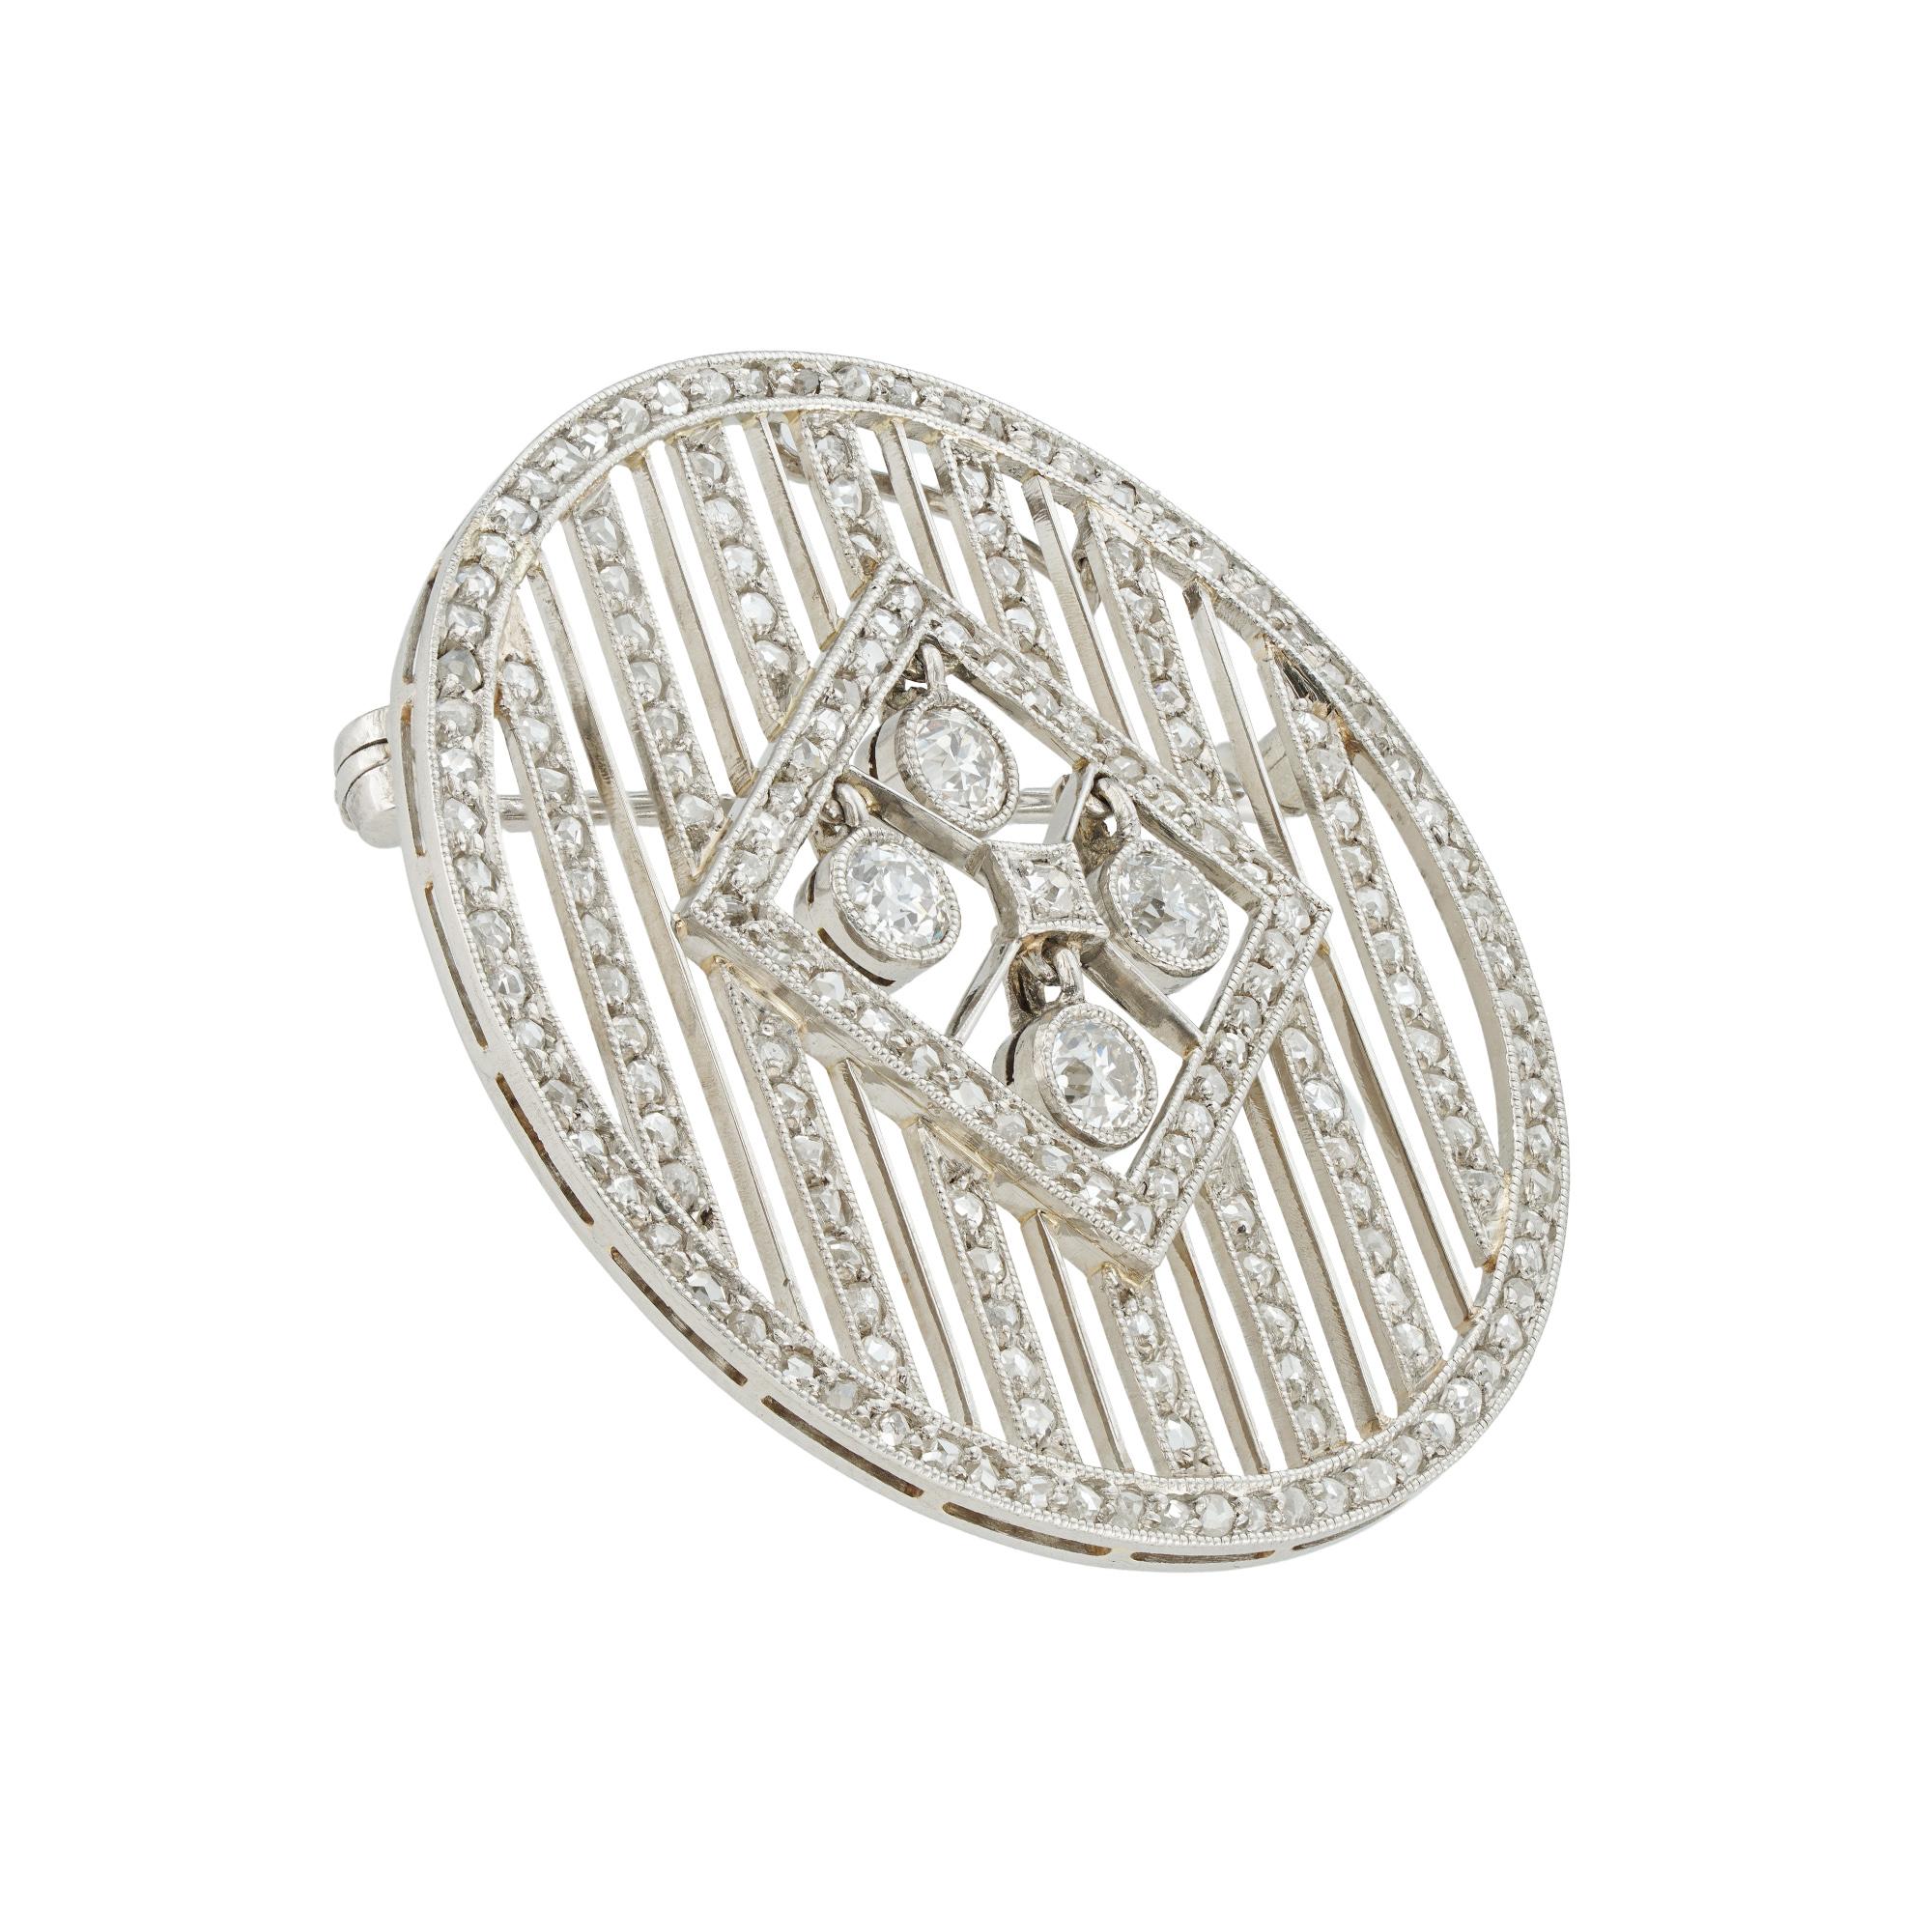 Art Deco An Edwardian circular diamond brooch-pendant